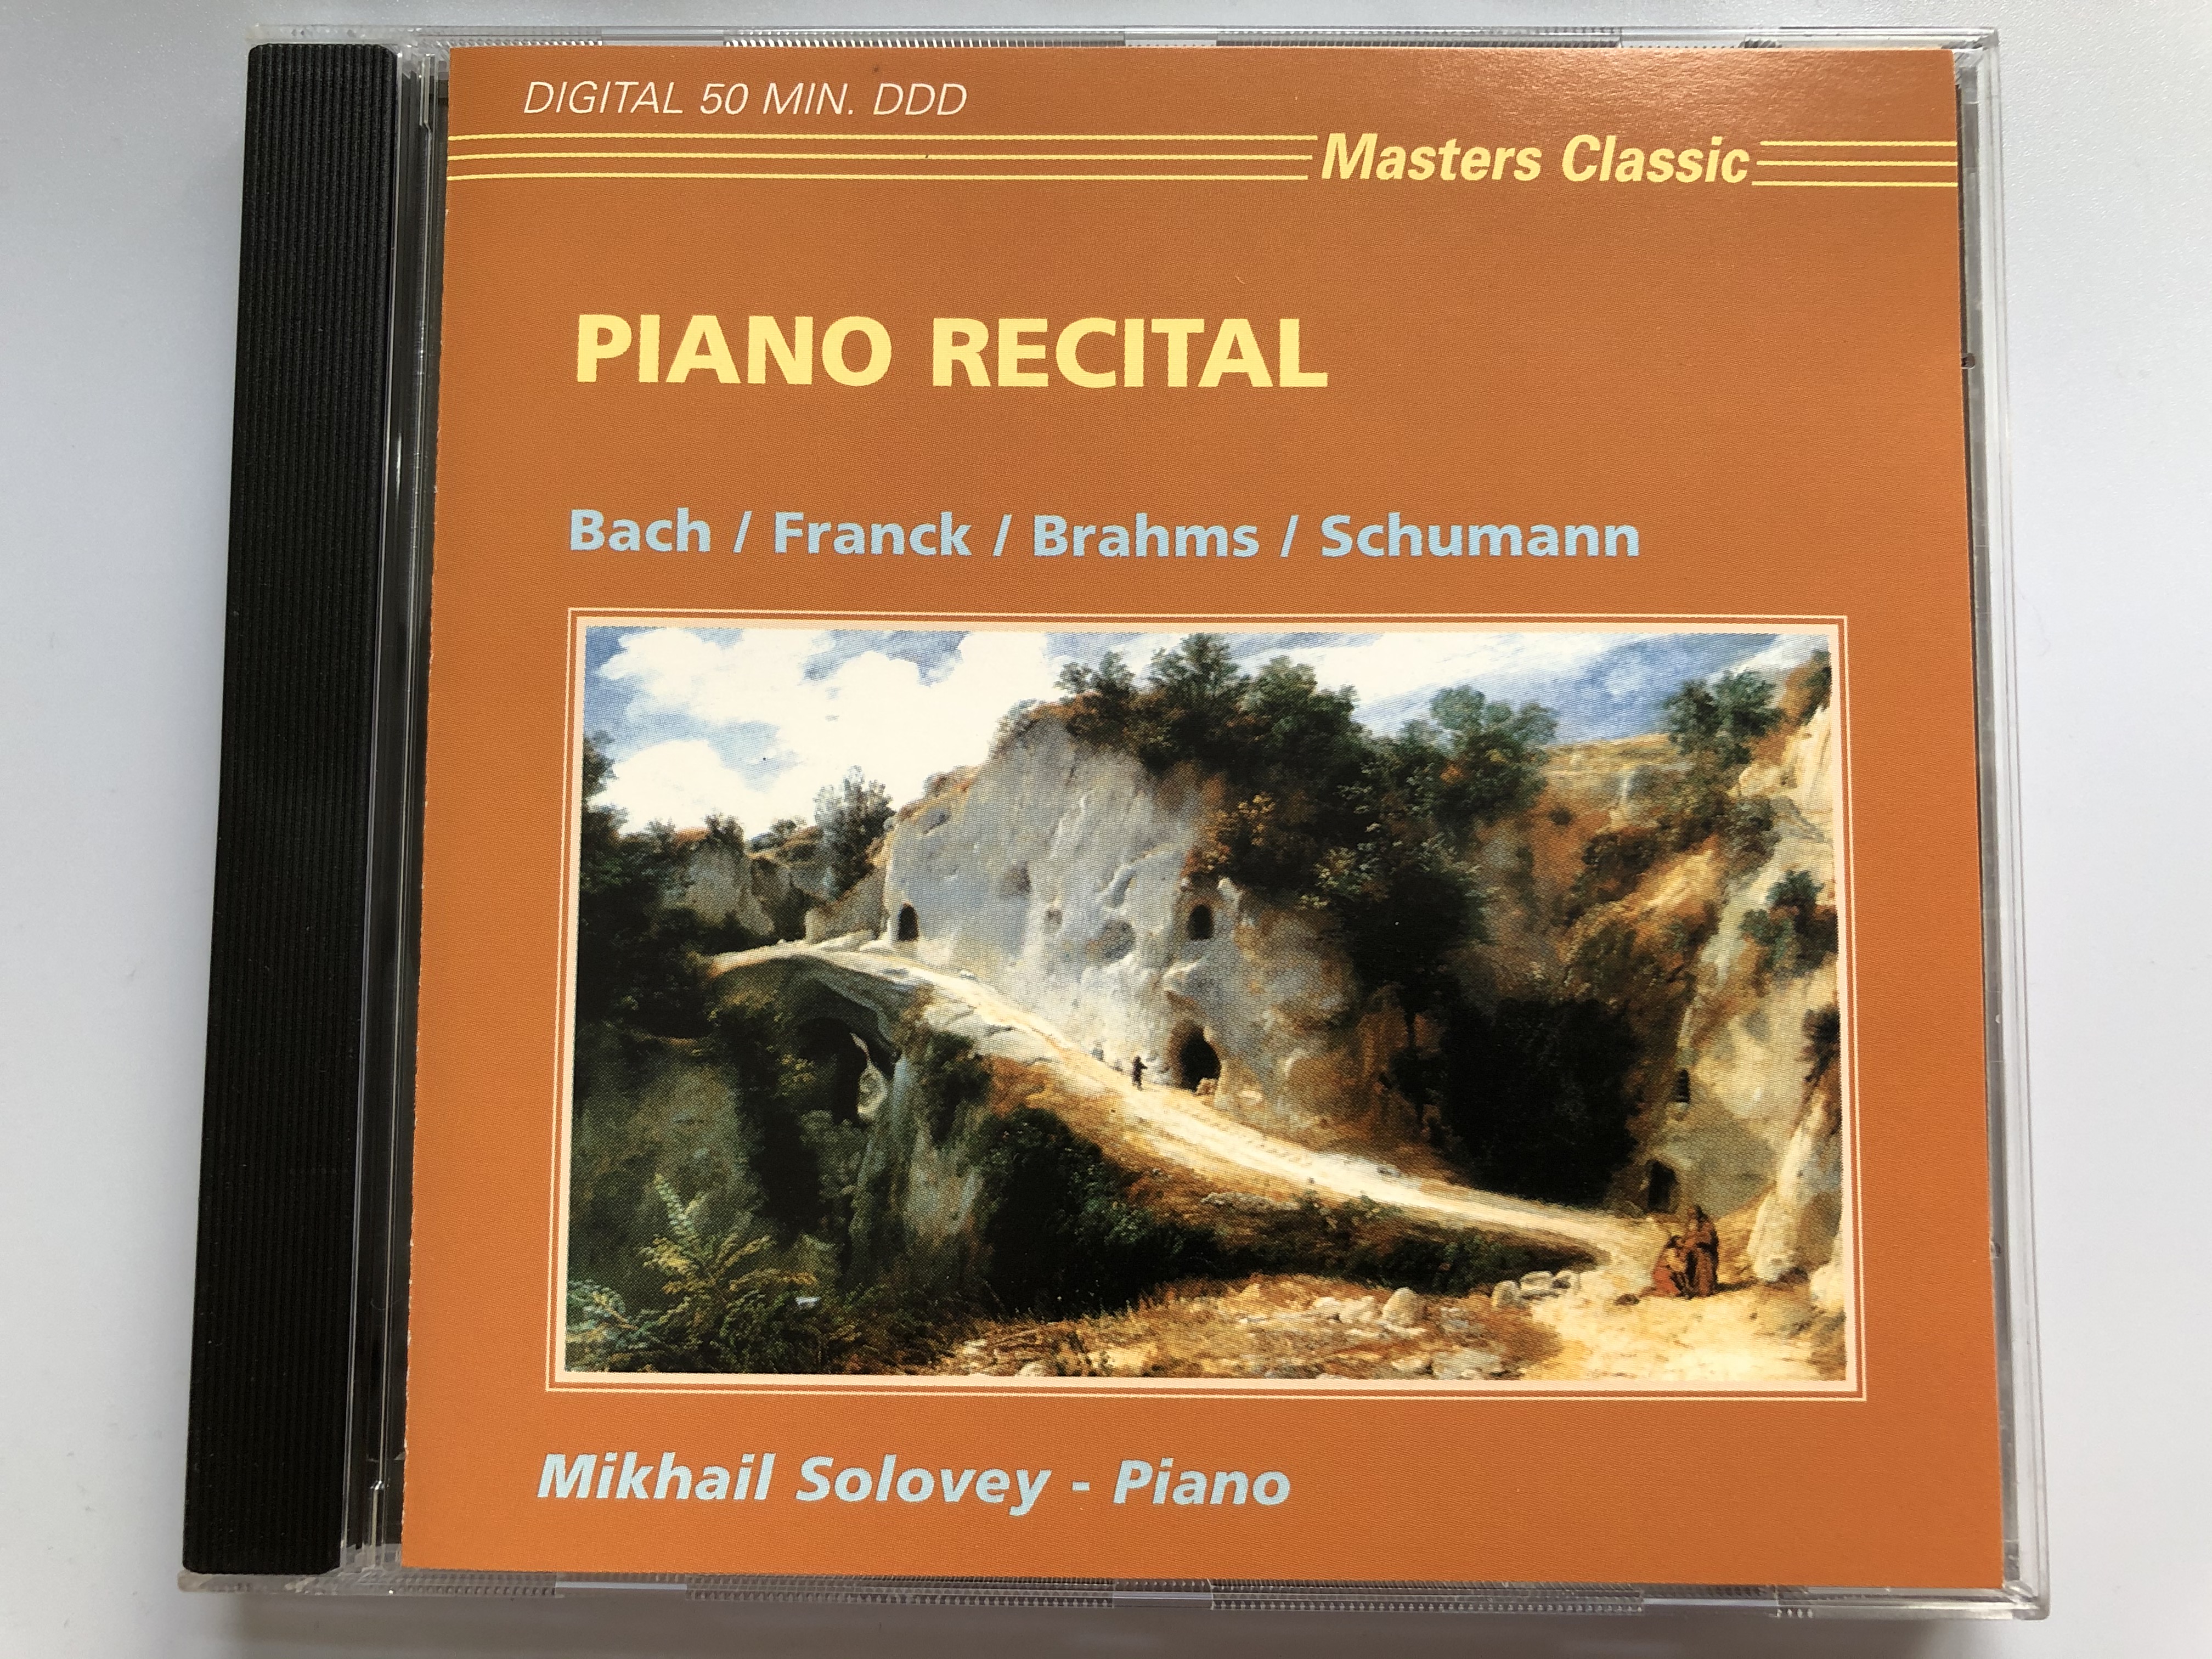 piano-recital-bach-franck-brahms-schumann-mikhail-solovey-piano-masters-classic-audio-cd-cls-4264-1-.jpg